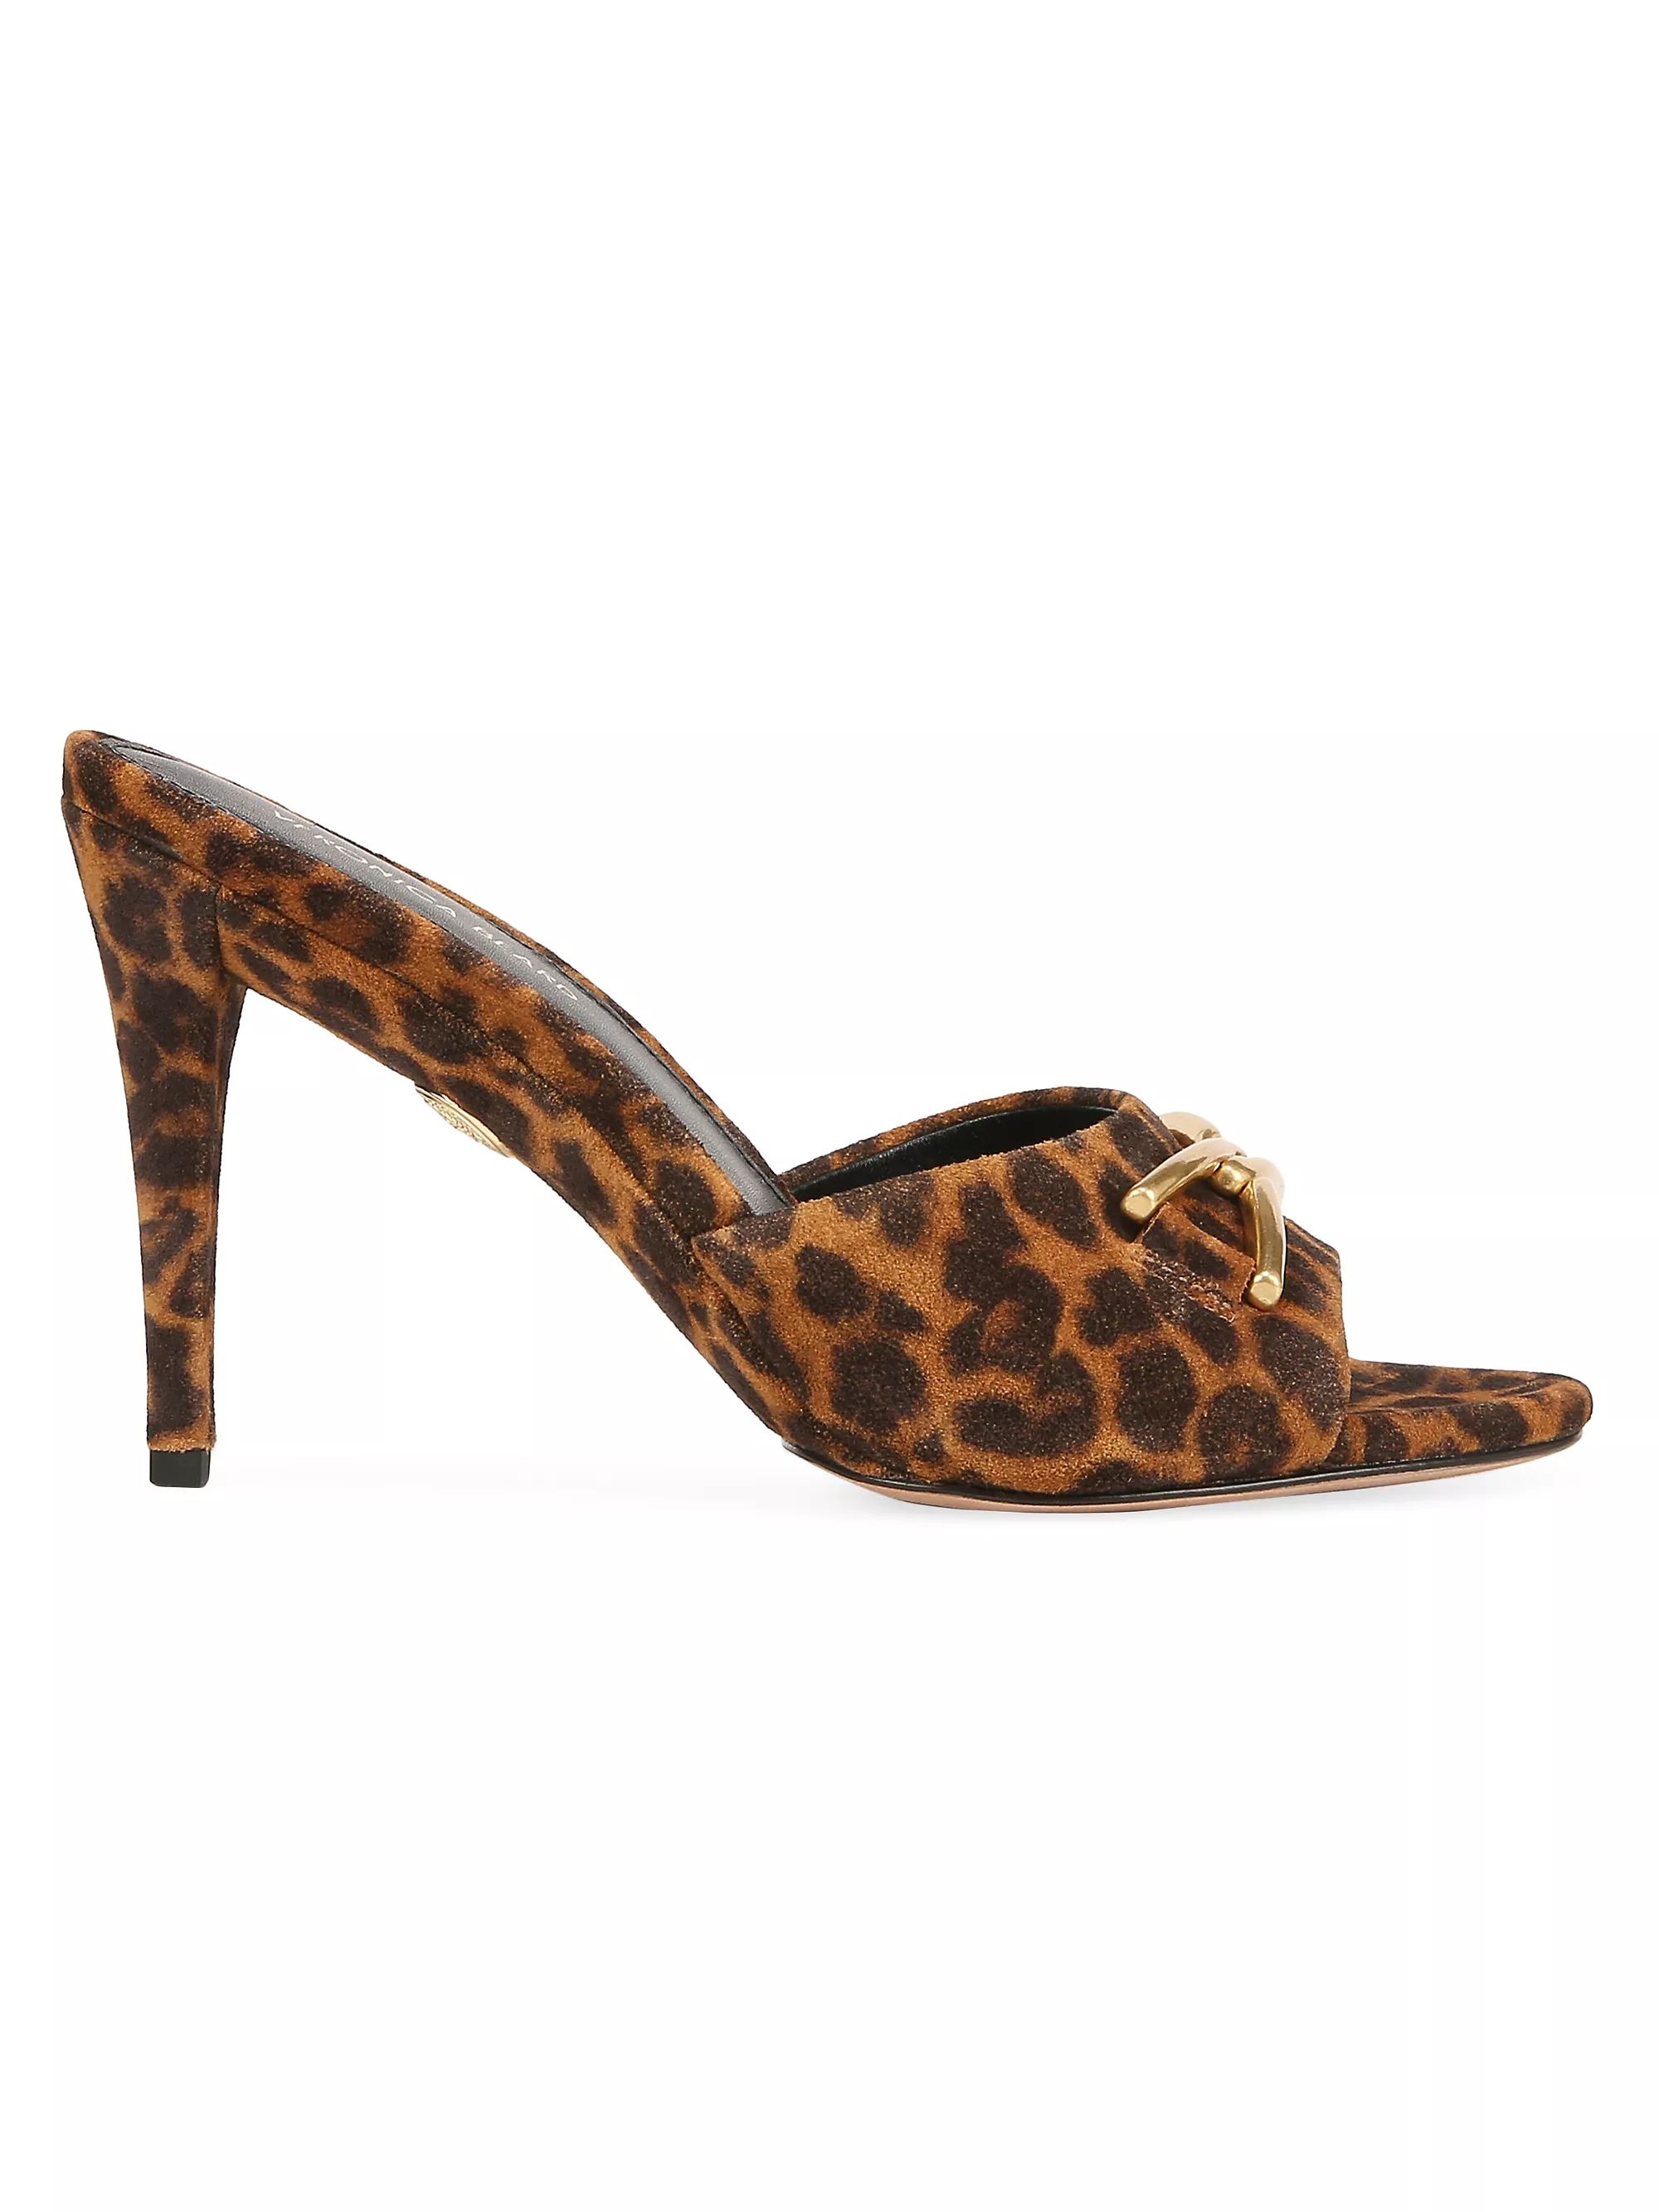 Shop Veronica Beard Mirren 95MM Leopard-Print Leather Sandals | Saks Fifth Avenue | Saks Fifth Avenue